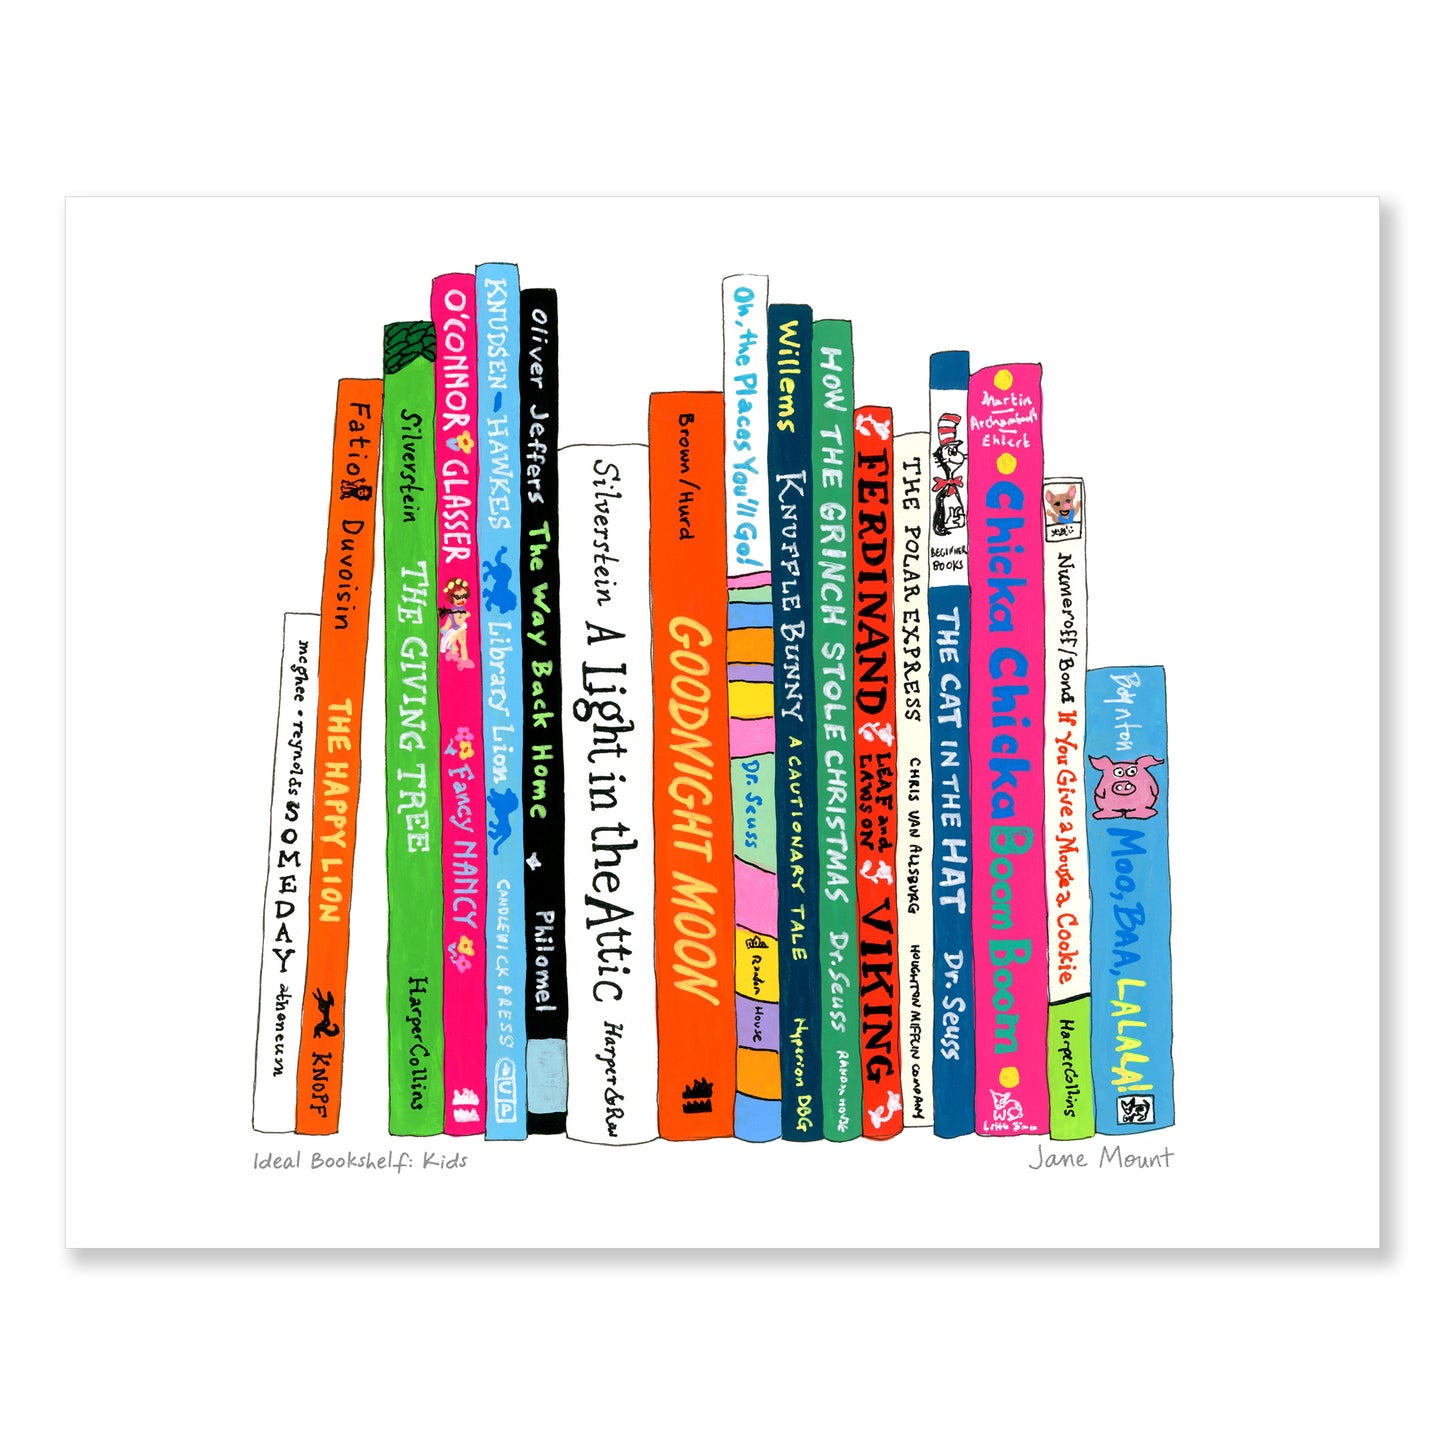 Ideal Bookshelf 314: Kids